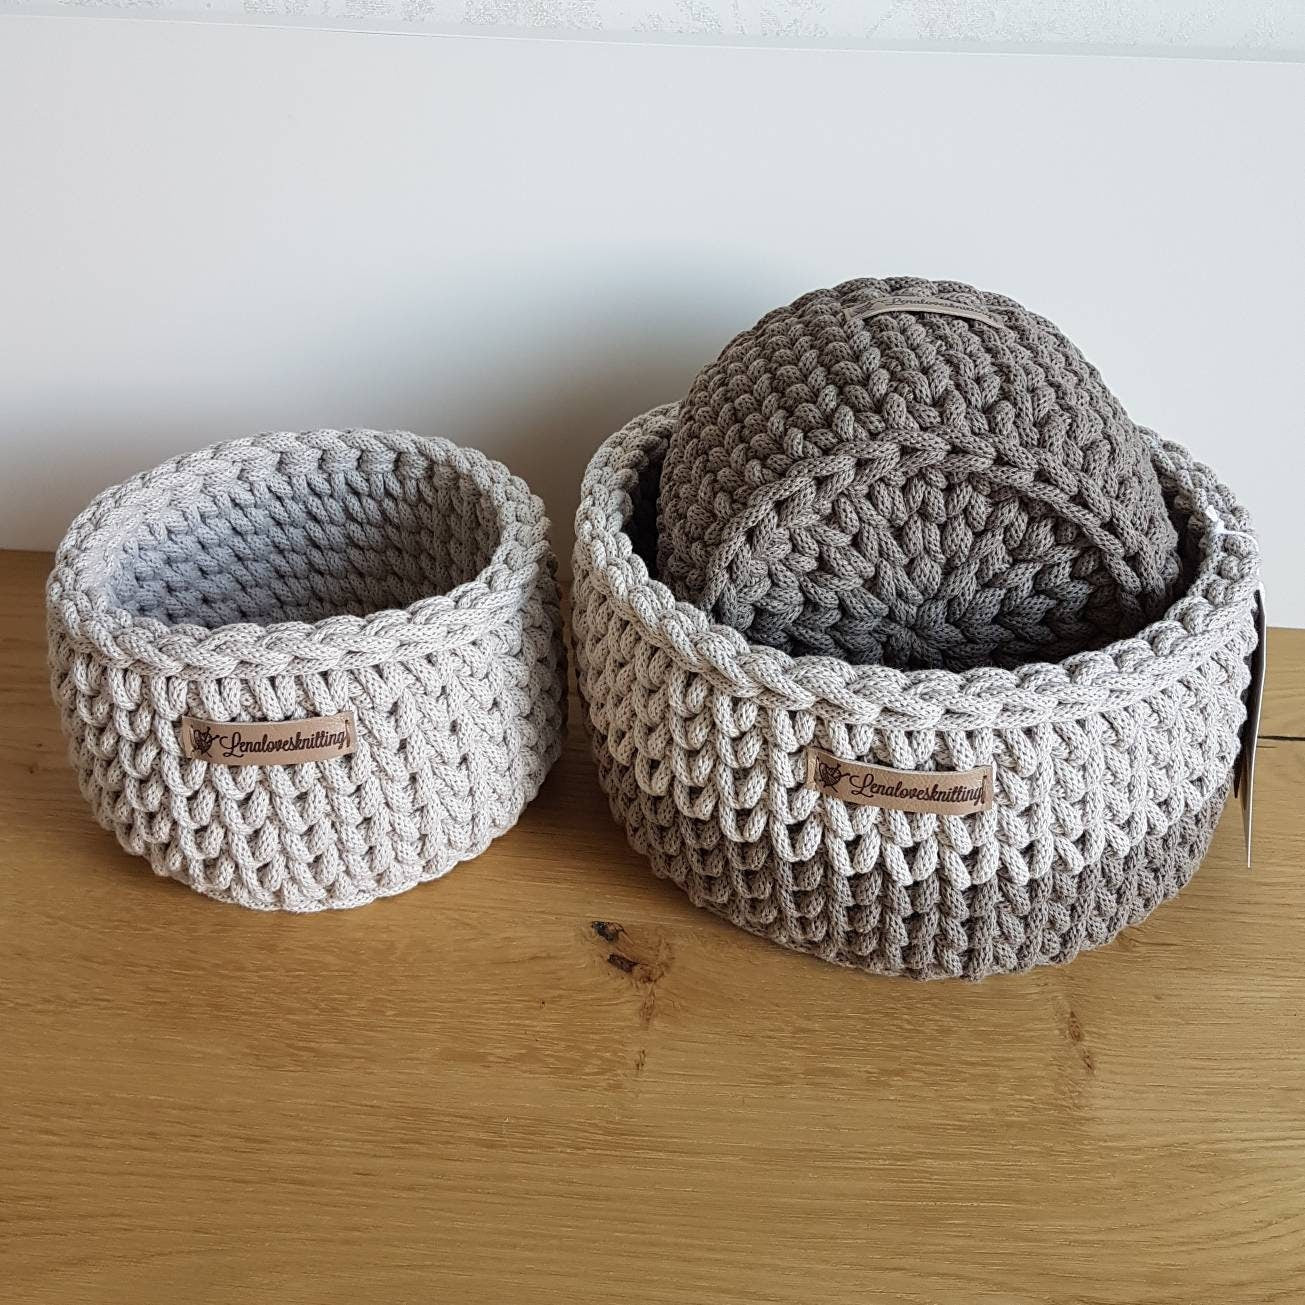 shower cotton lenalovesknitting – Set crocheted baby gift cord idea baskets from of 3